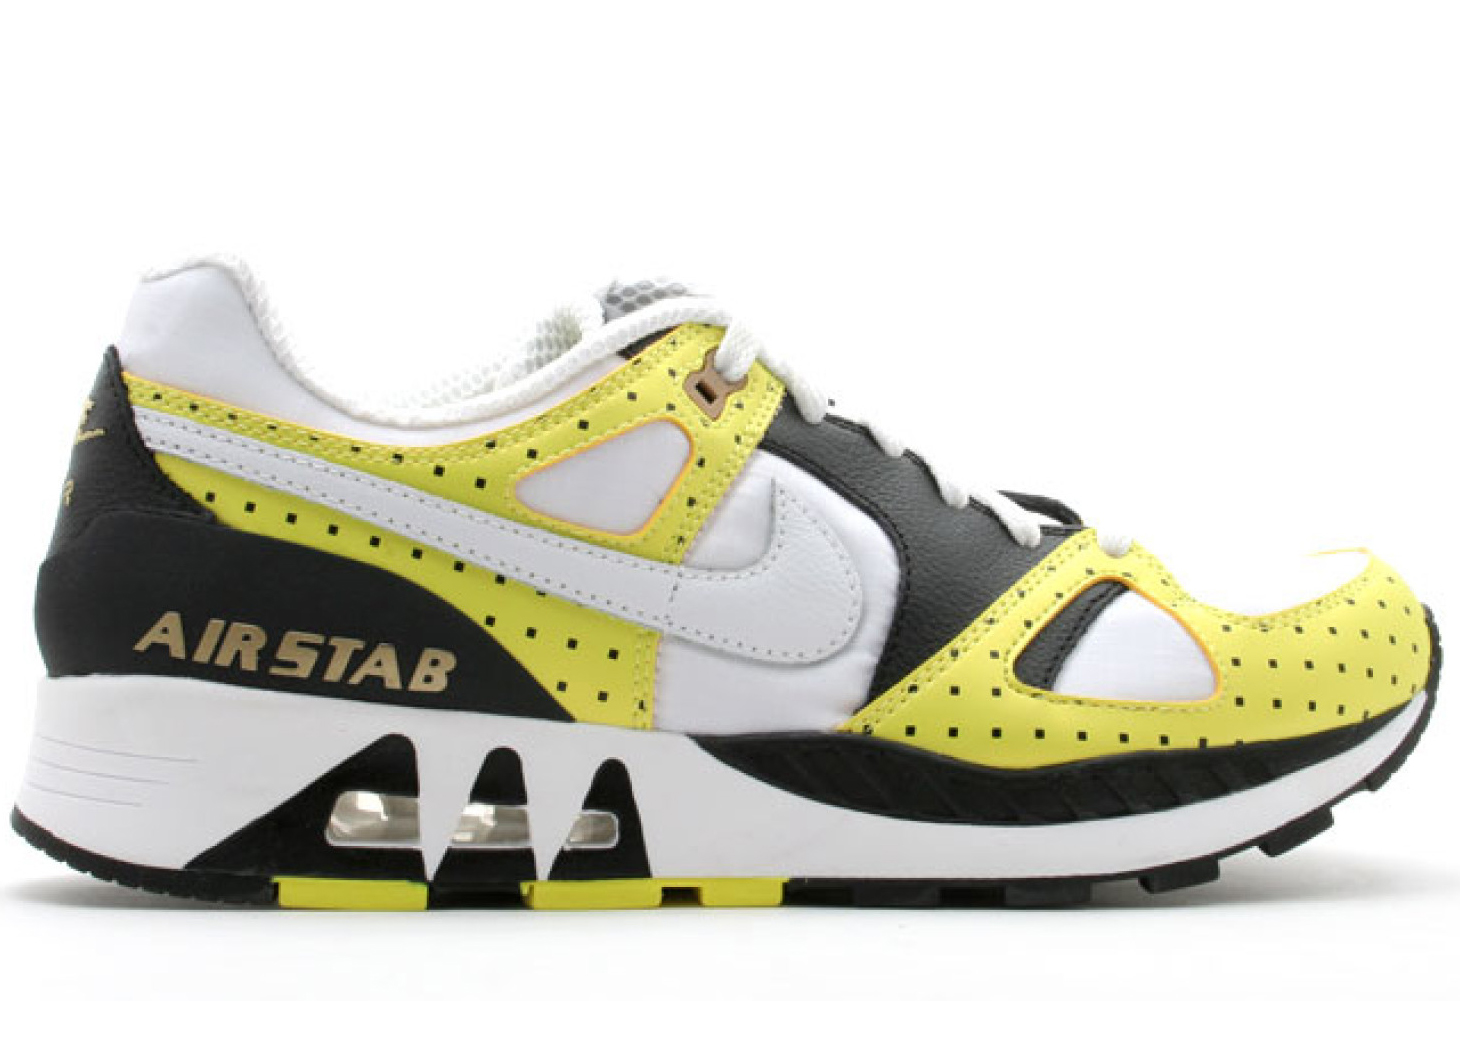 Nike Air Stab White Voltage Yellow (2007)